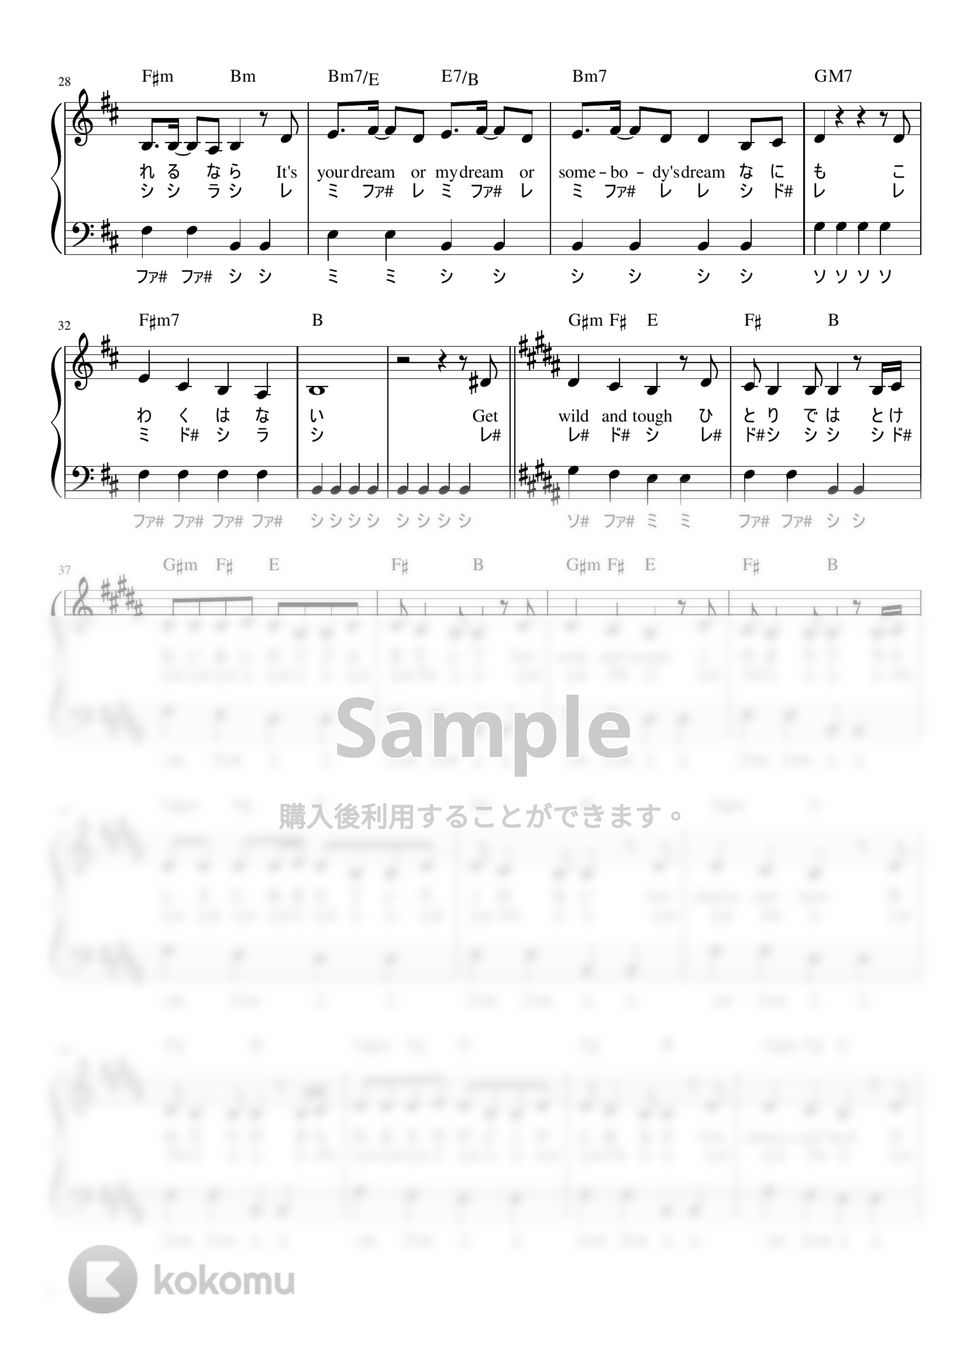 TM NETWORK - Get Wild (かんたん / 歌詞付き / ドレミ付き / 初心者) by piano.tokyo